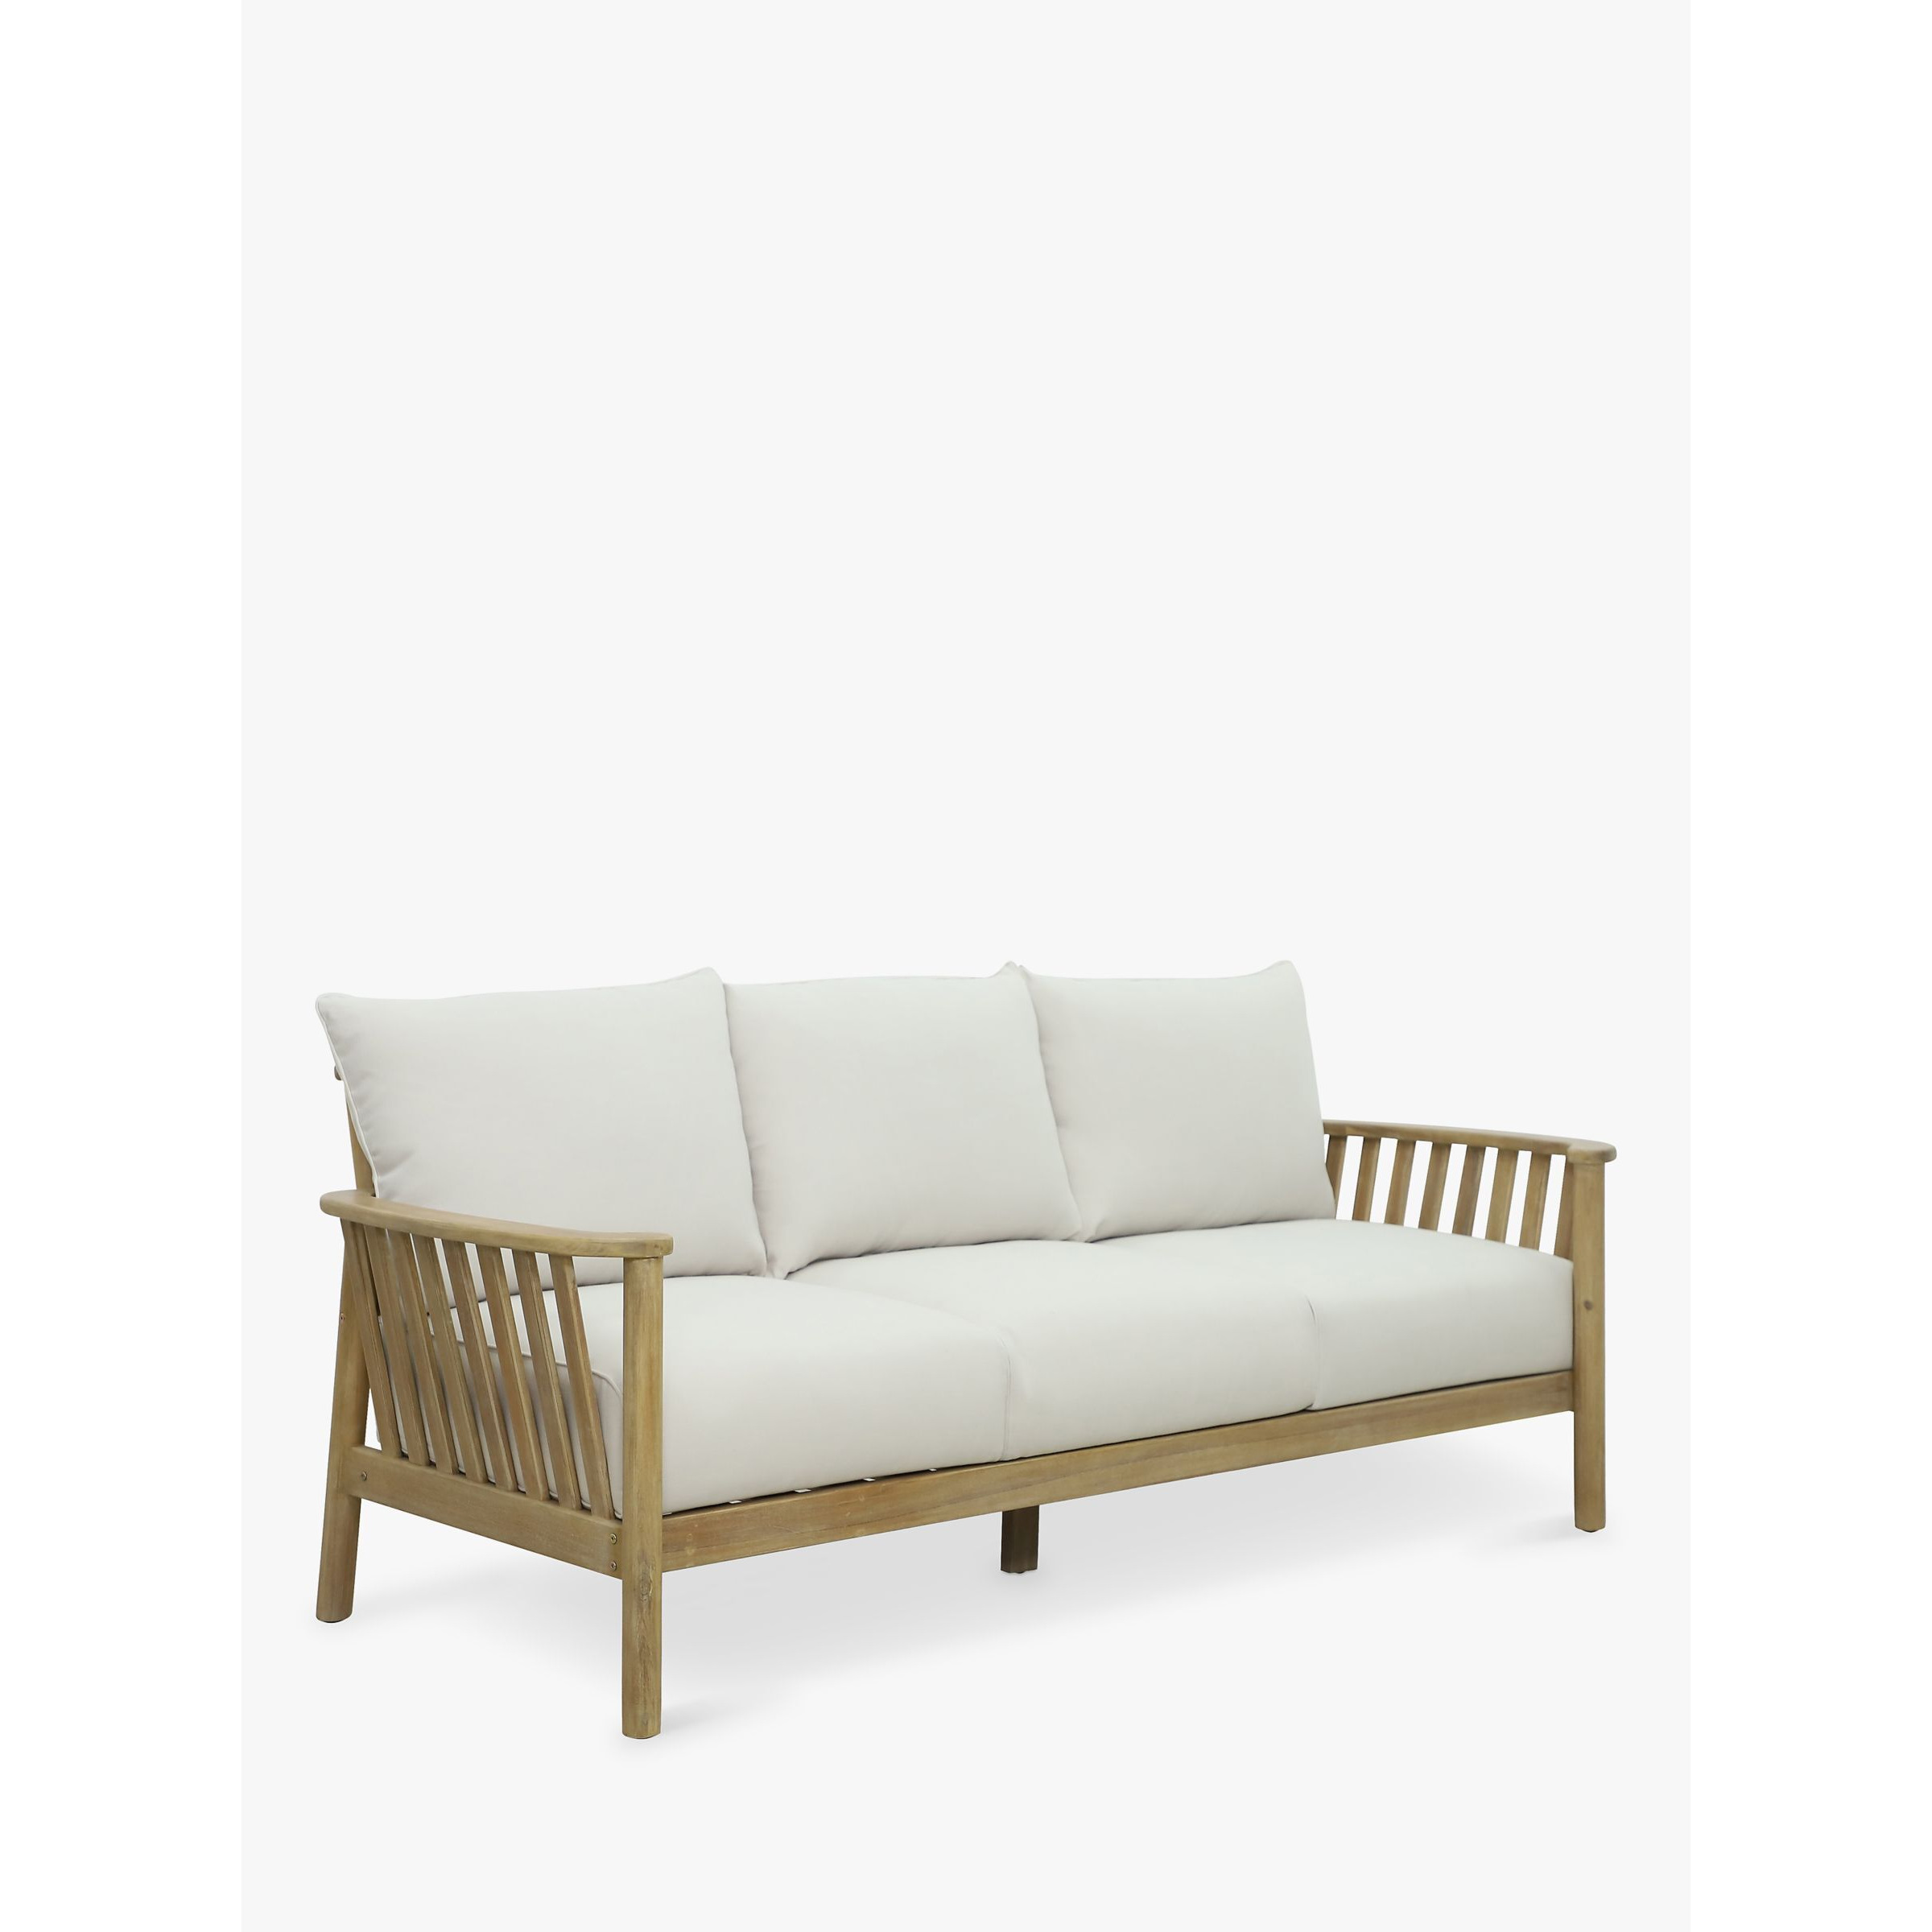 John Lewis Boardwalk 3-Seater Garden Sofa, FSC-Certified (Acacia Wood), Natural - image 1